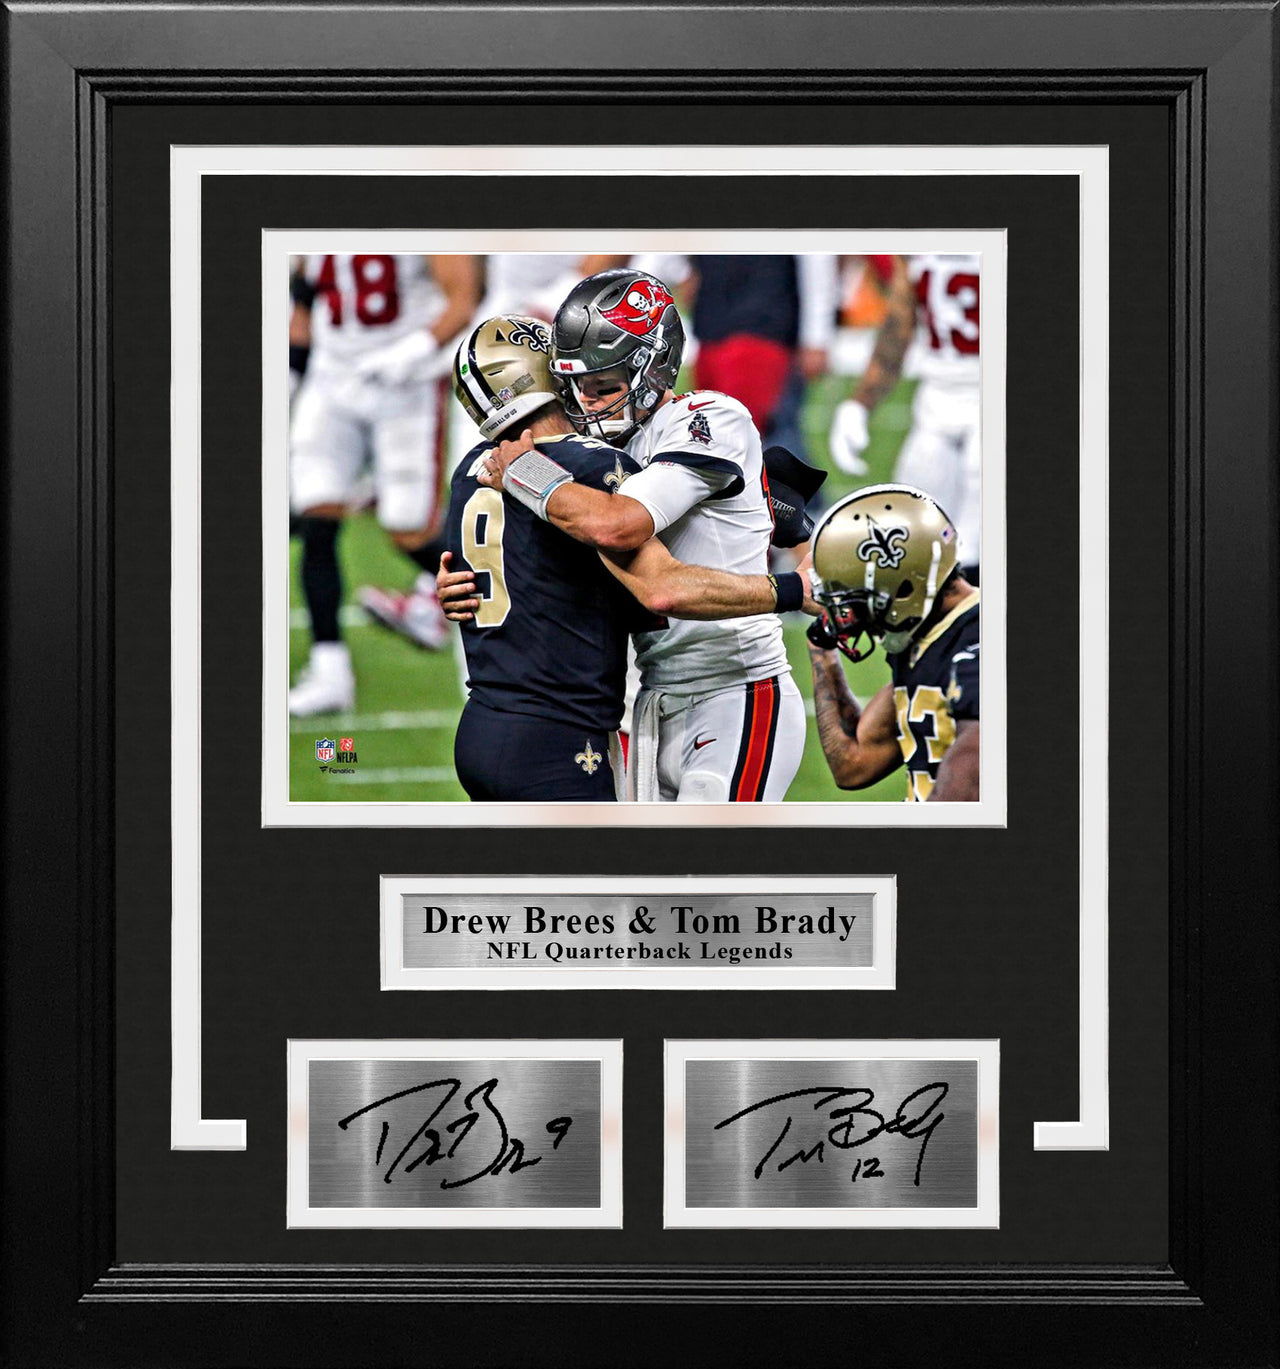 Drew Brees and Tom Brady 8" x 10" Framed Quarterback Legends Football Photo with Engraved Autographs - Dynasty Sports & Framing 